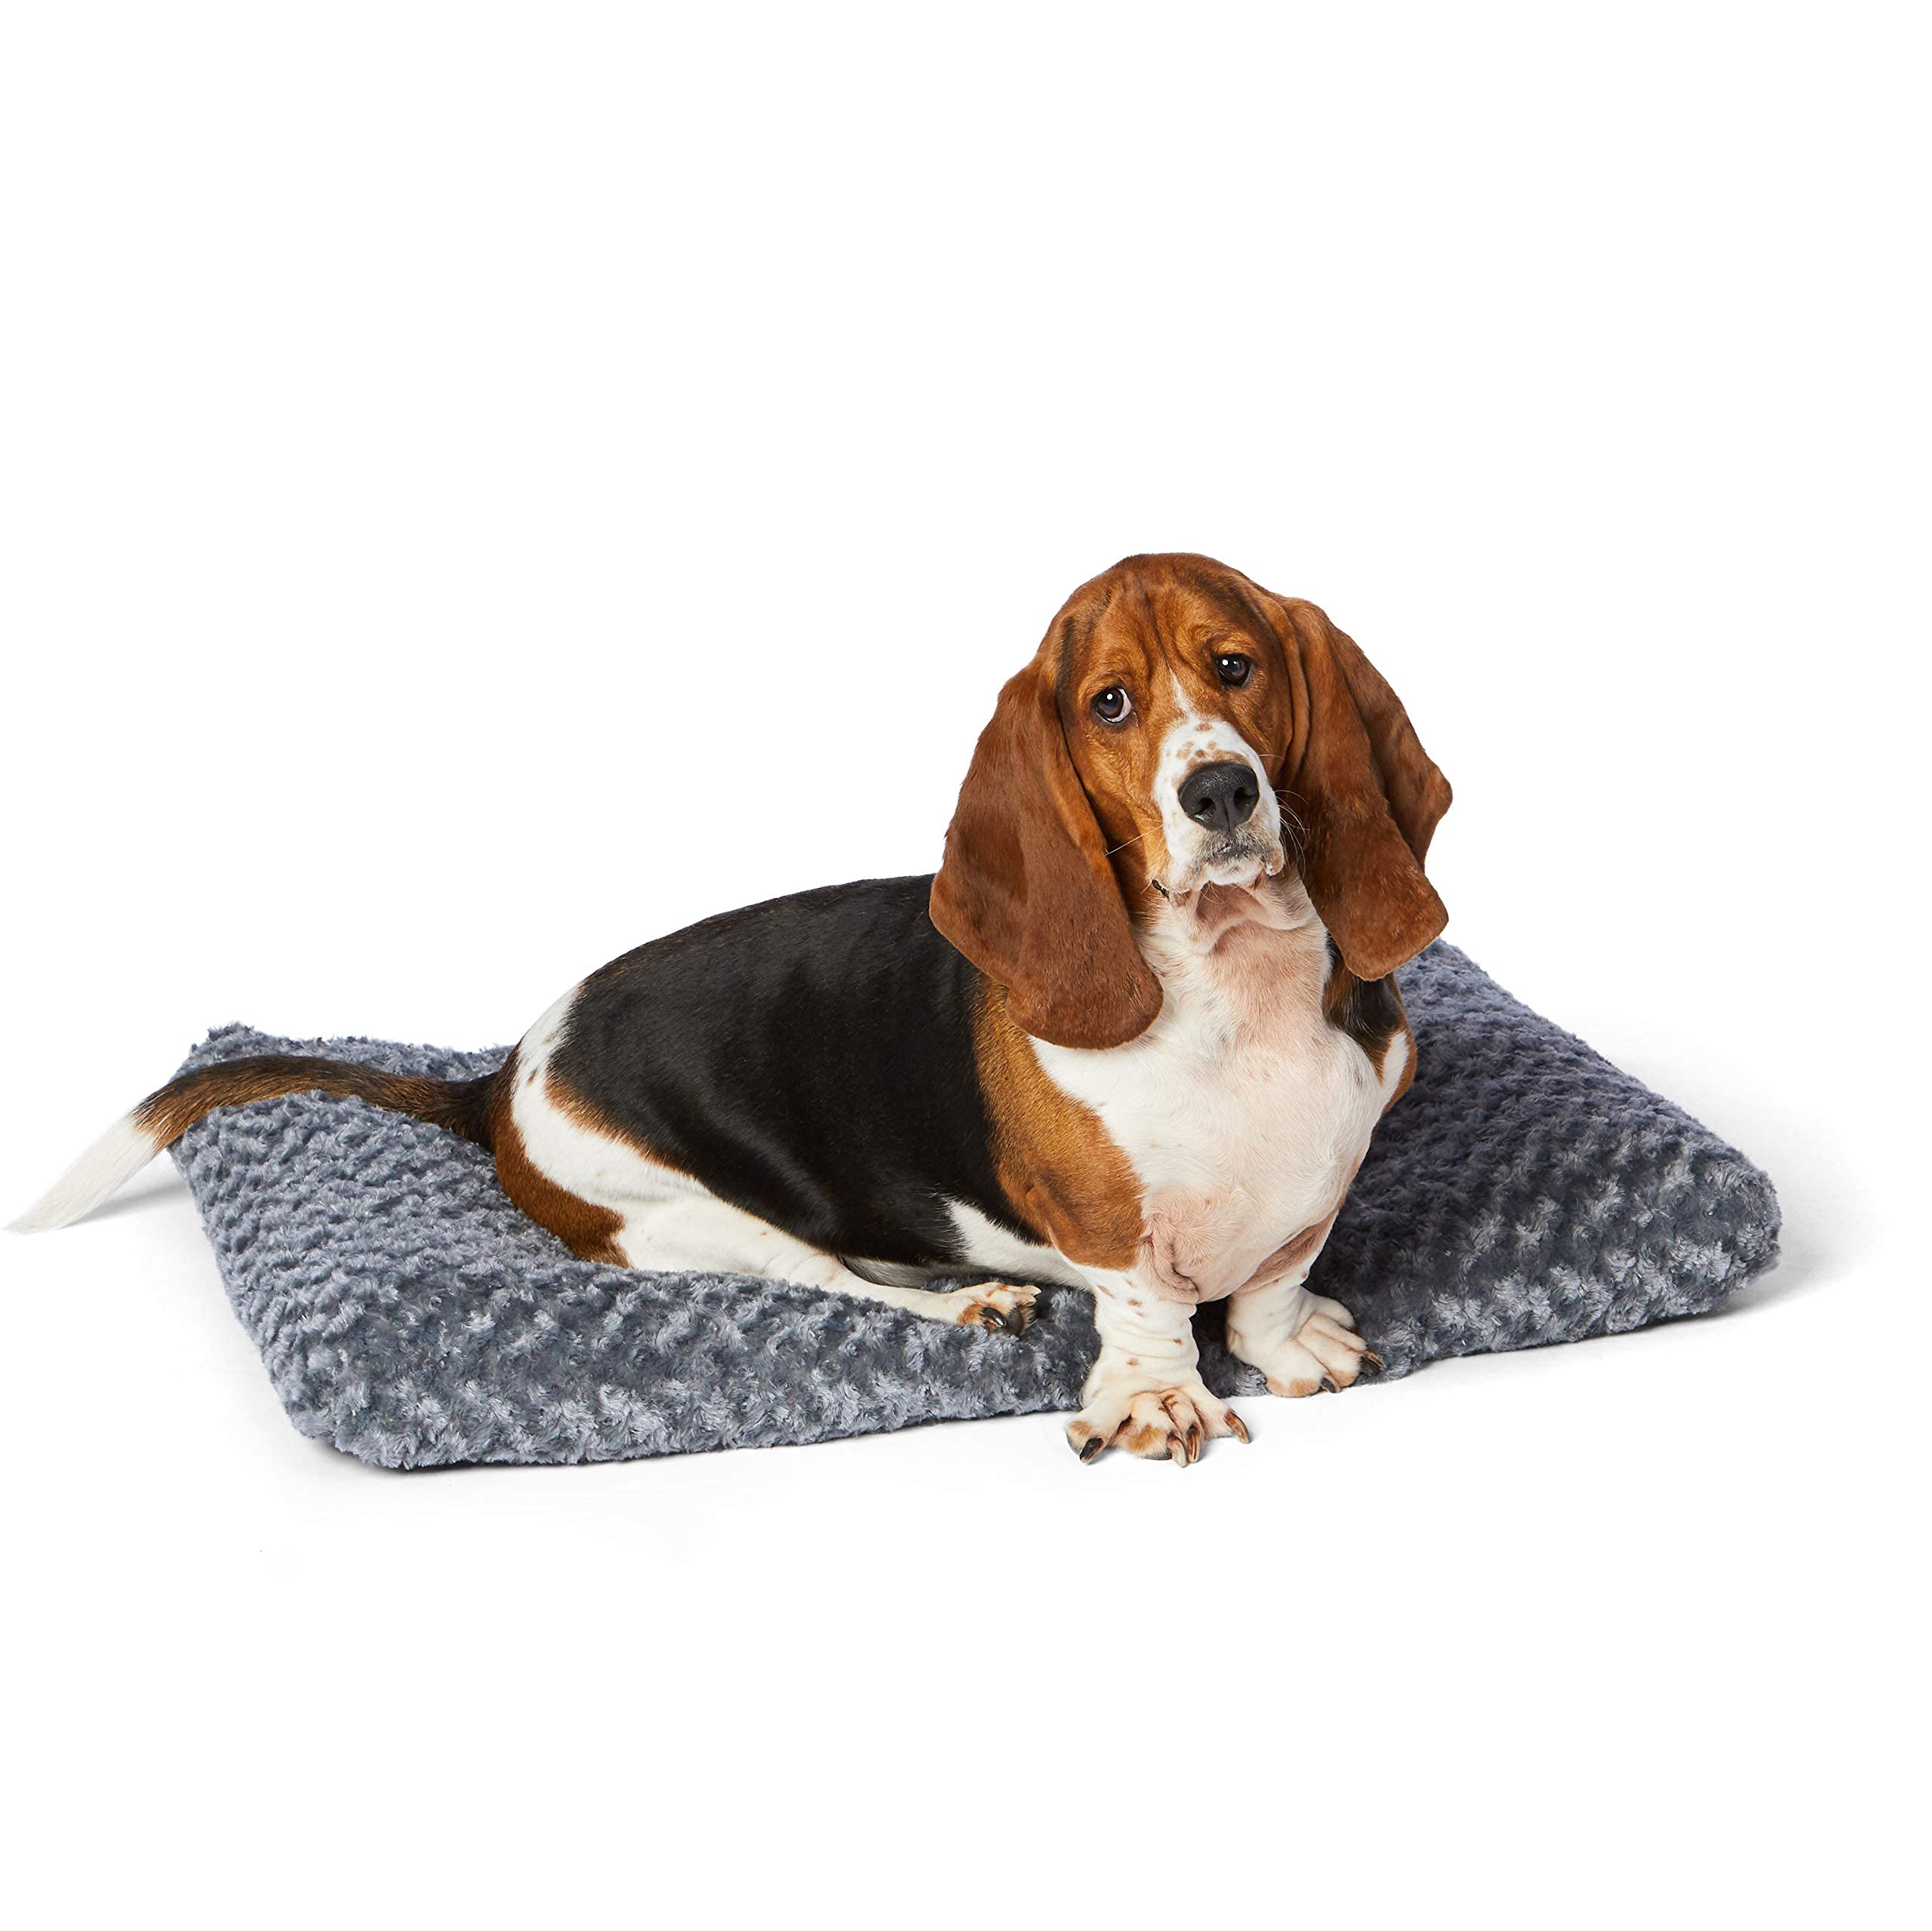 35" x 23" Amazon Basics Plush Pet Bed (Medium, Gray Swirl) $18.60 + Free Shipping w/ Prime or on $25+